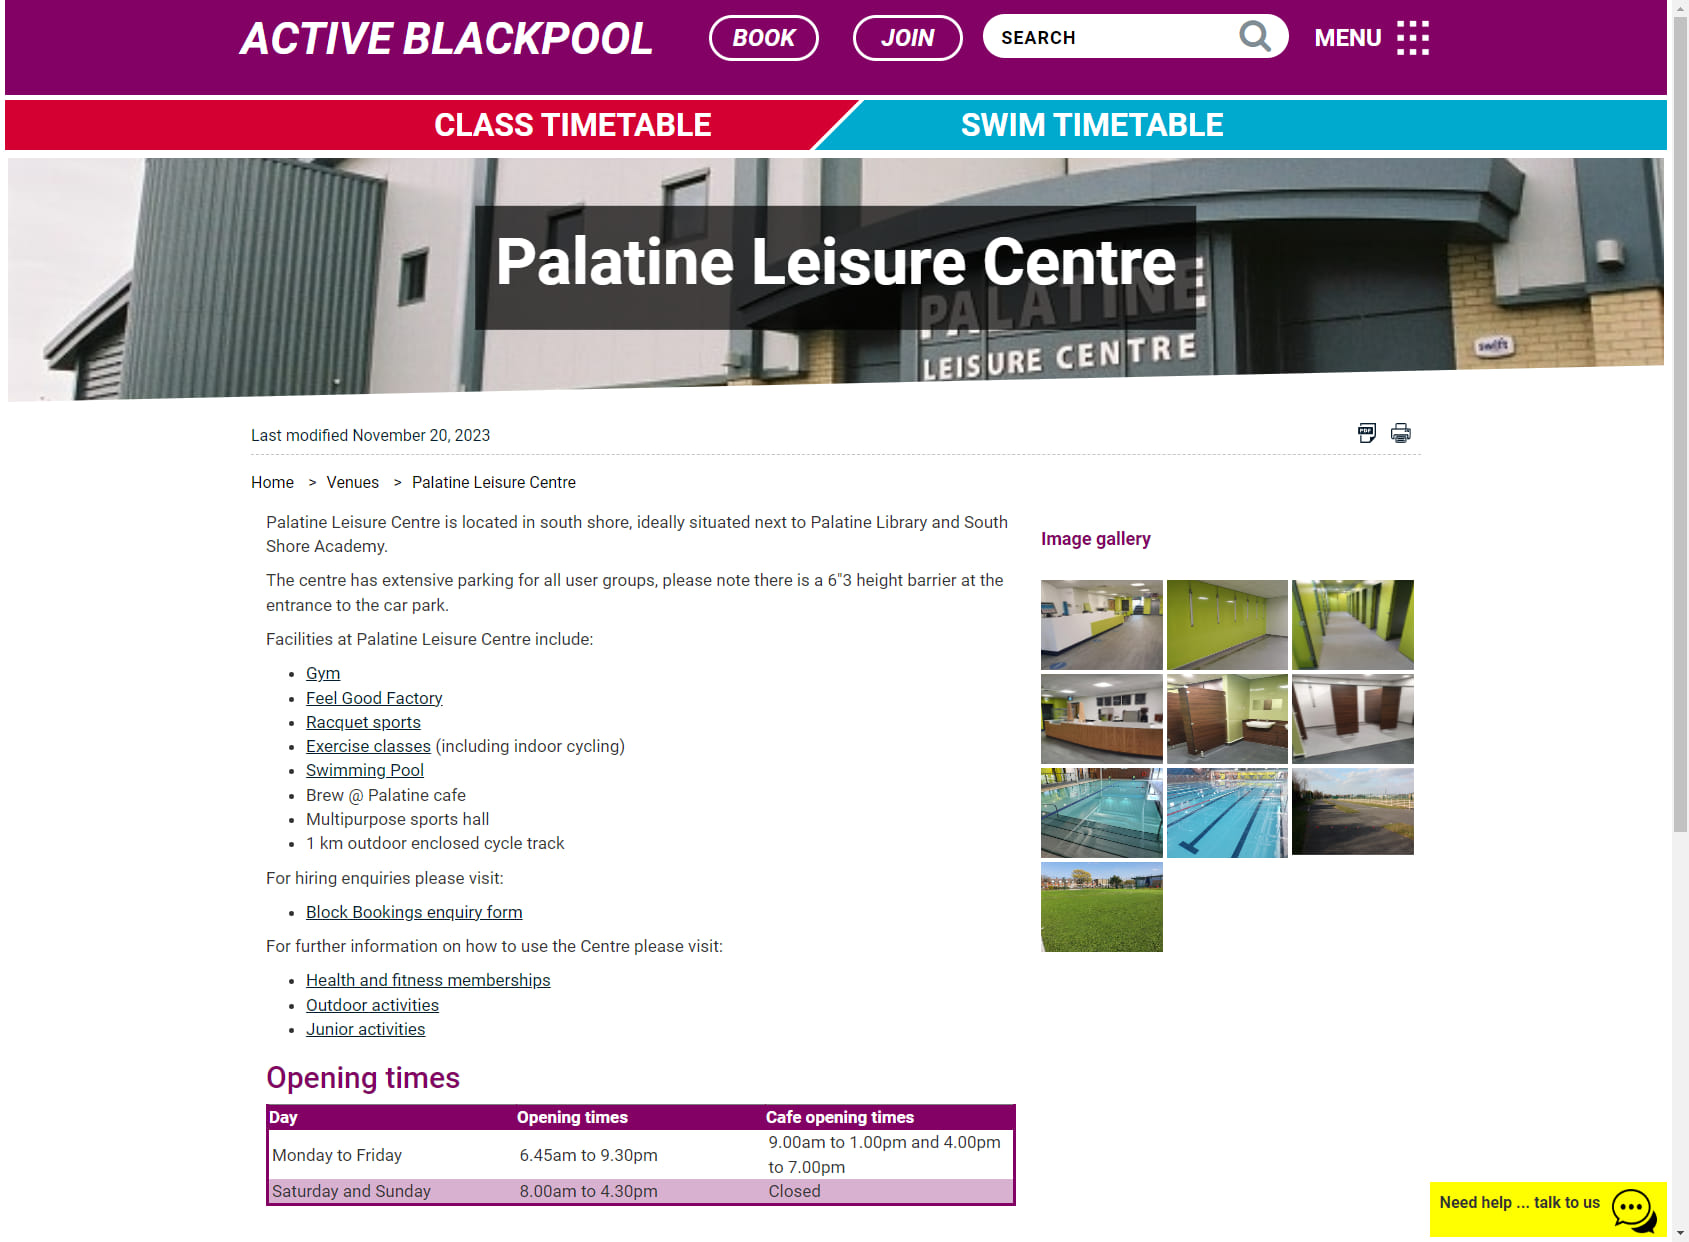 Palatine Leisure Centre